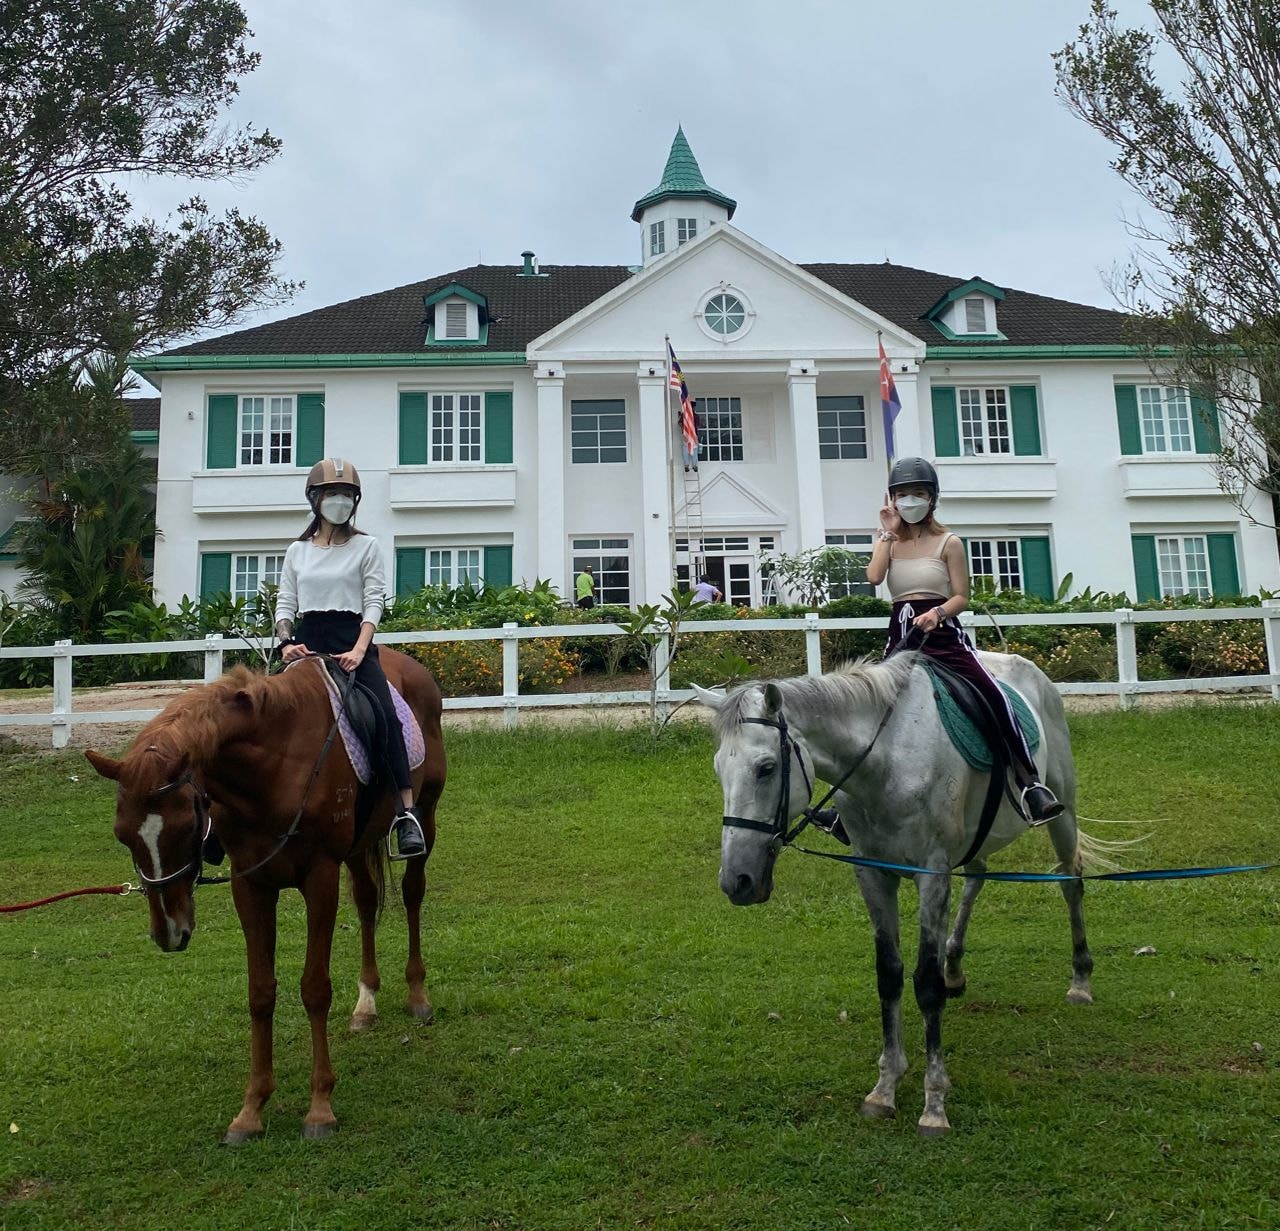 想要骑马的朋友，可以来Riders Resort体验骑马的乐趣。-图取自Riders Resort脸书-